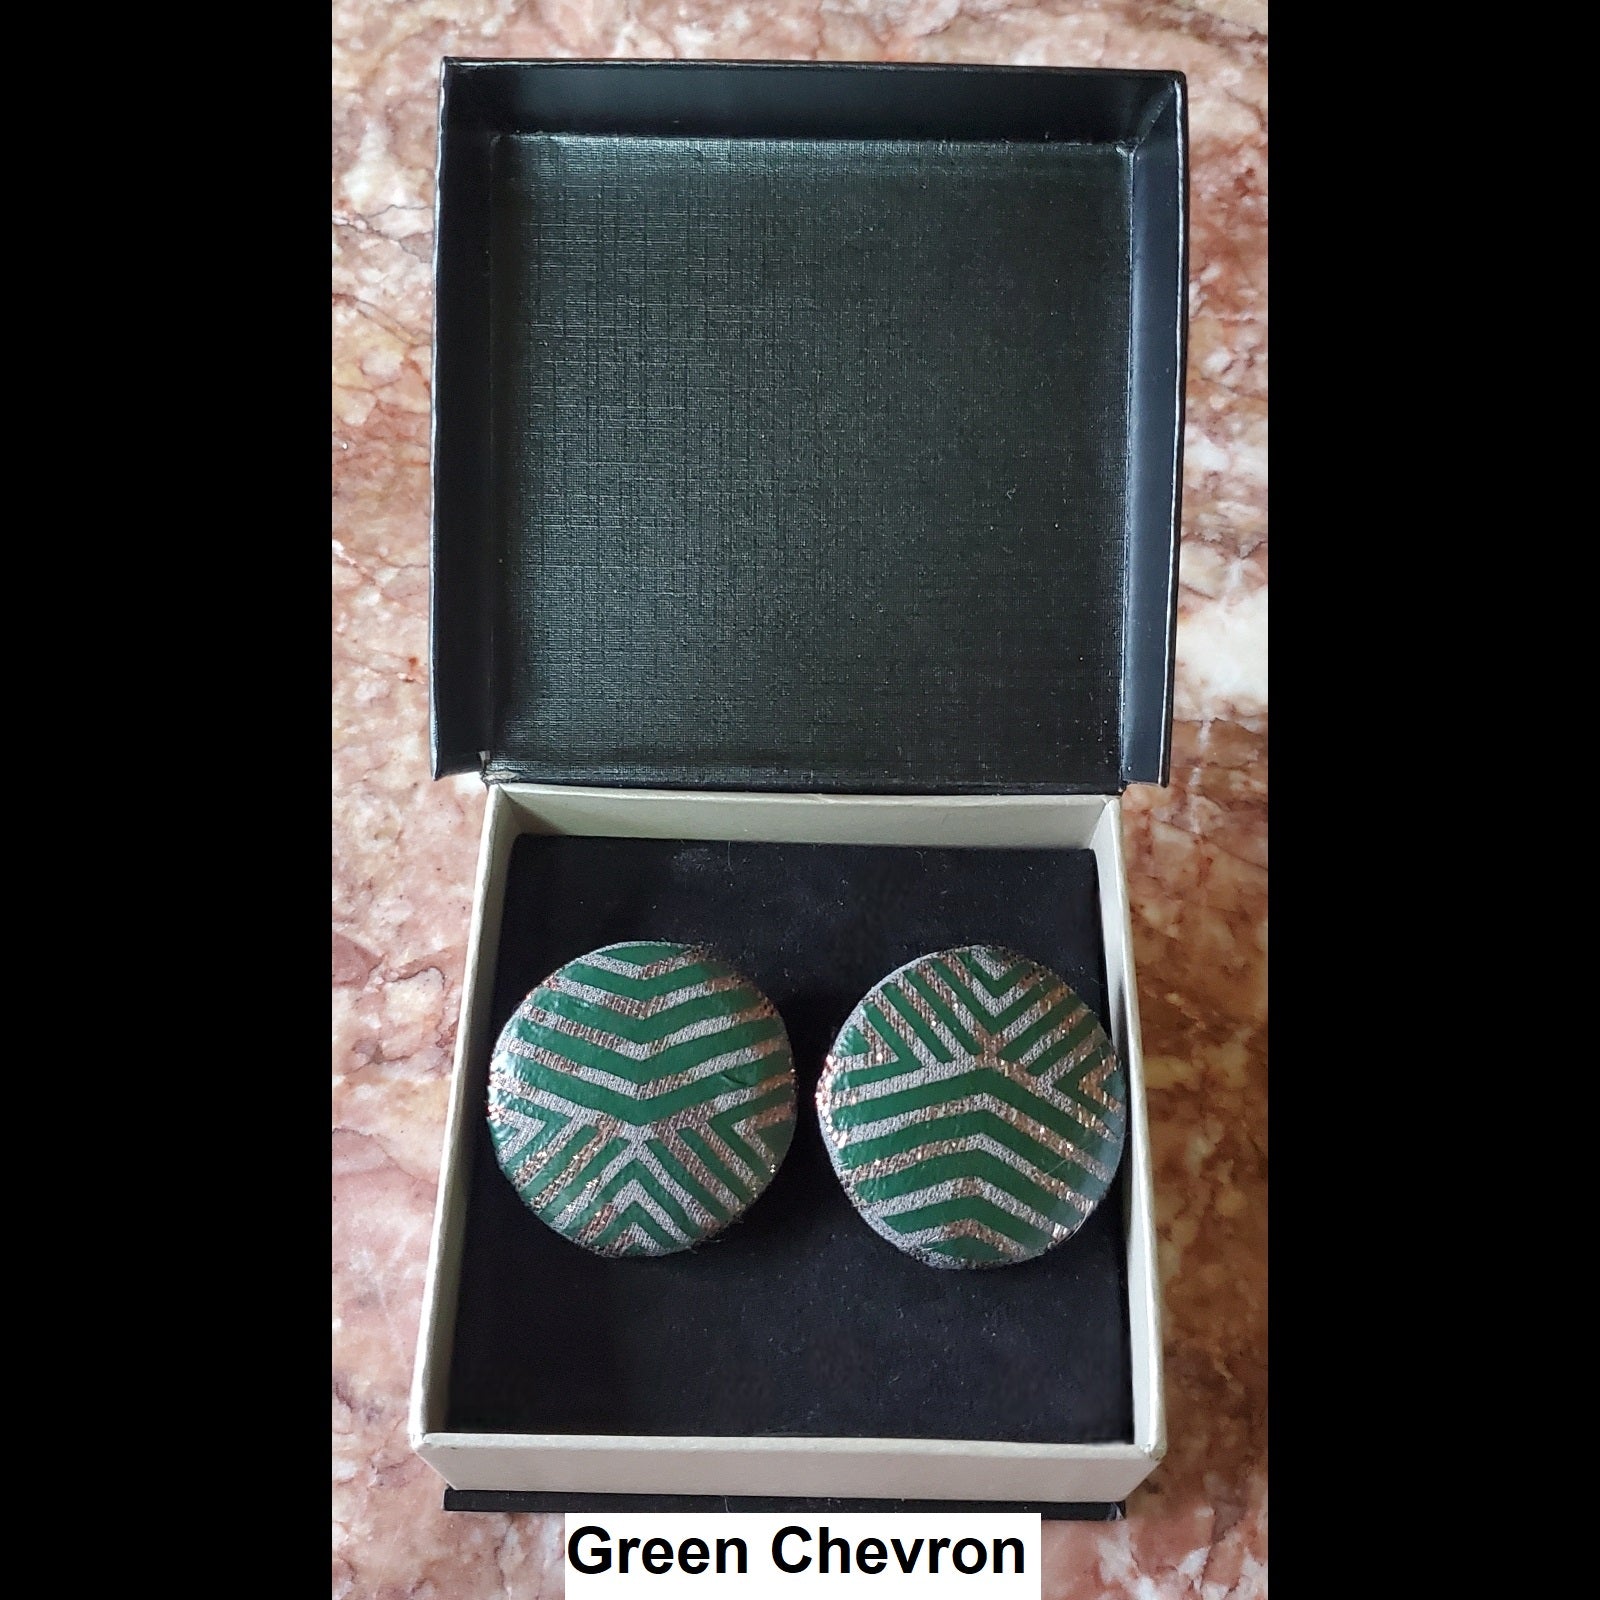 Green chevron print button earrings in jewelry box